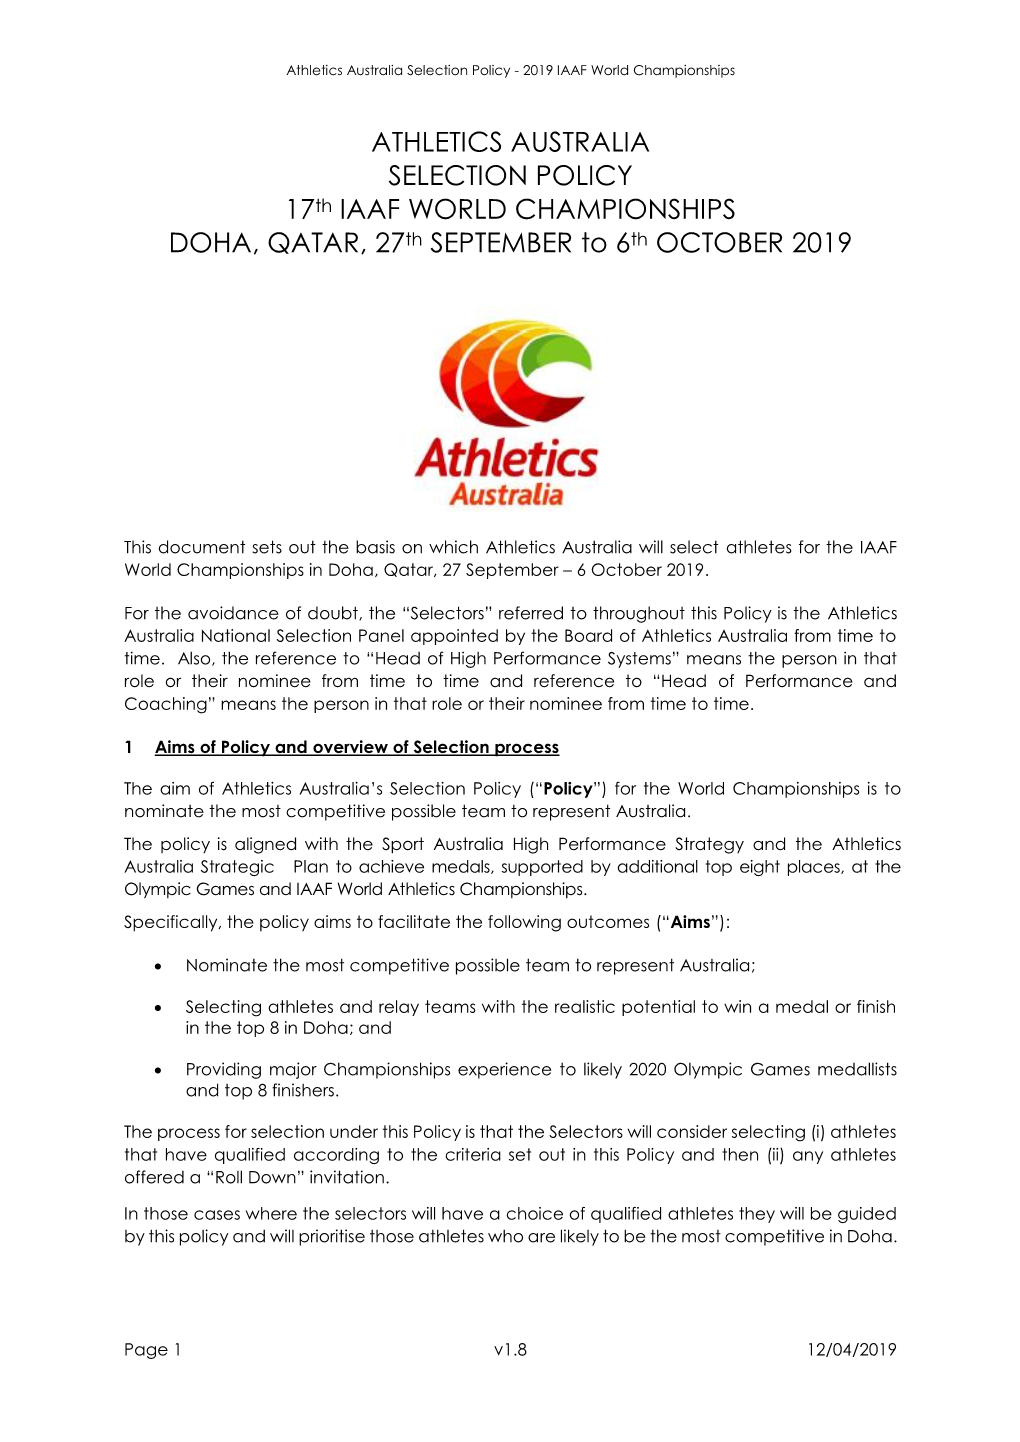 ATHLETICS AUSTRALIA SELECTION POLICY 17Th IAAF WORLD CHAMPIONSHIPS DOHA, QATAR, 27Th SEPTEMBER to 6Th OCTOBER 2019